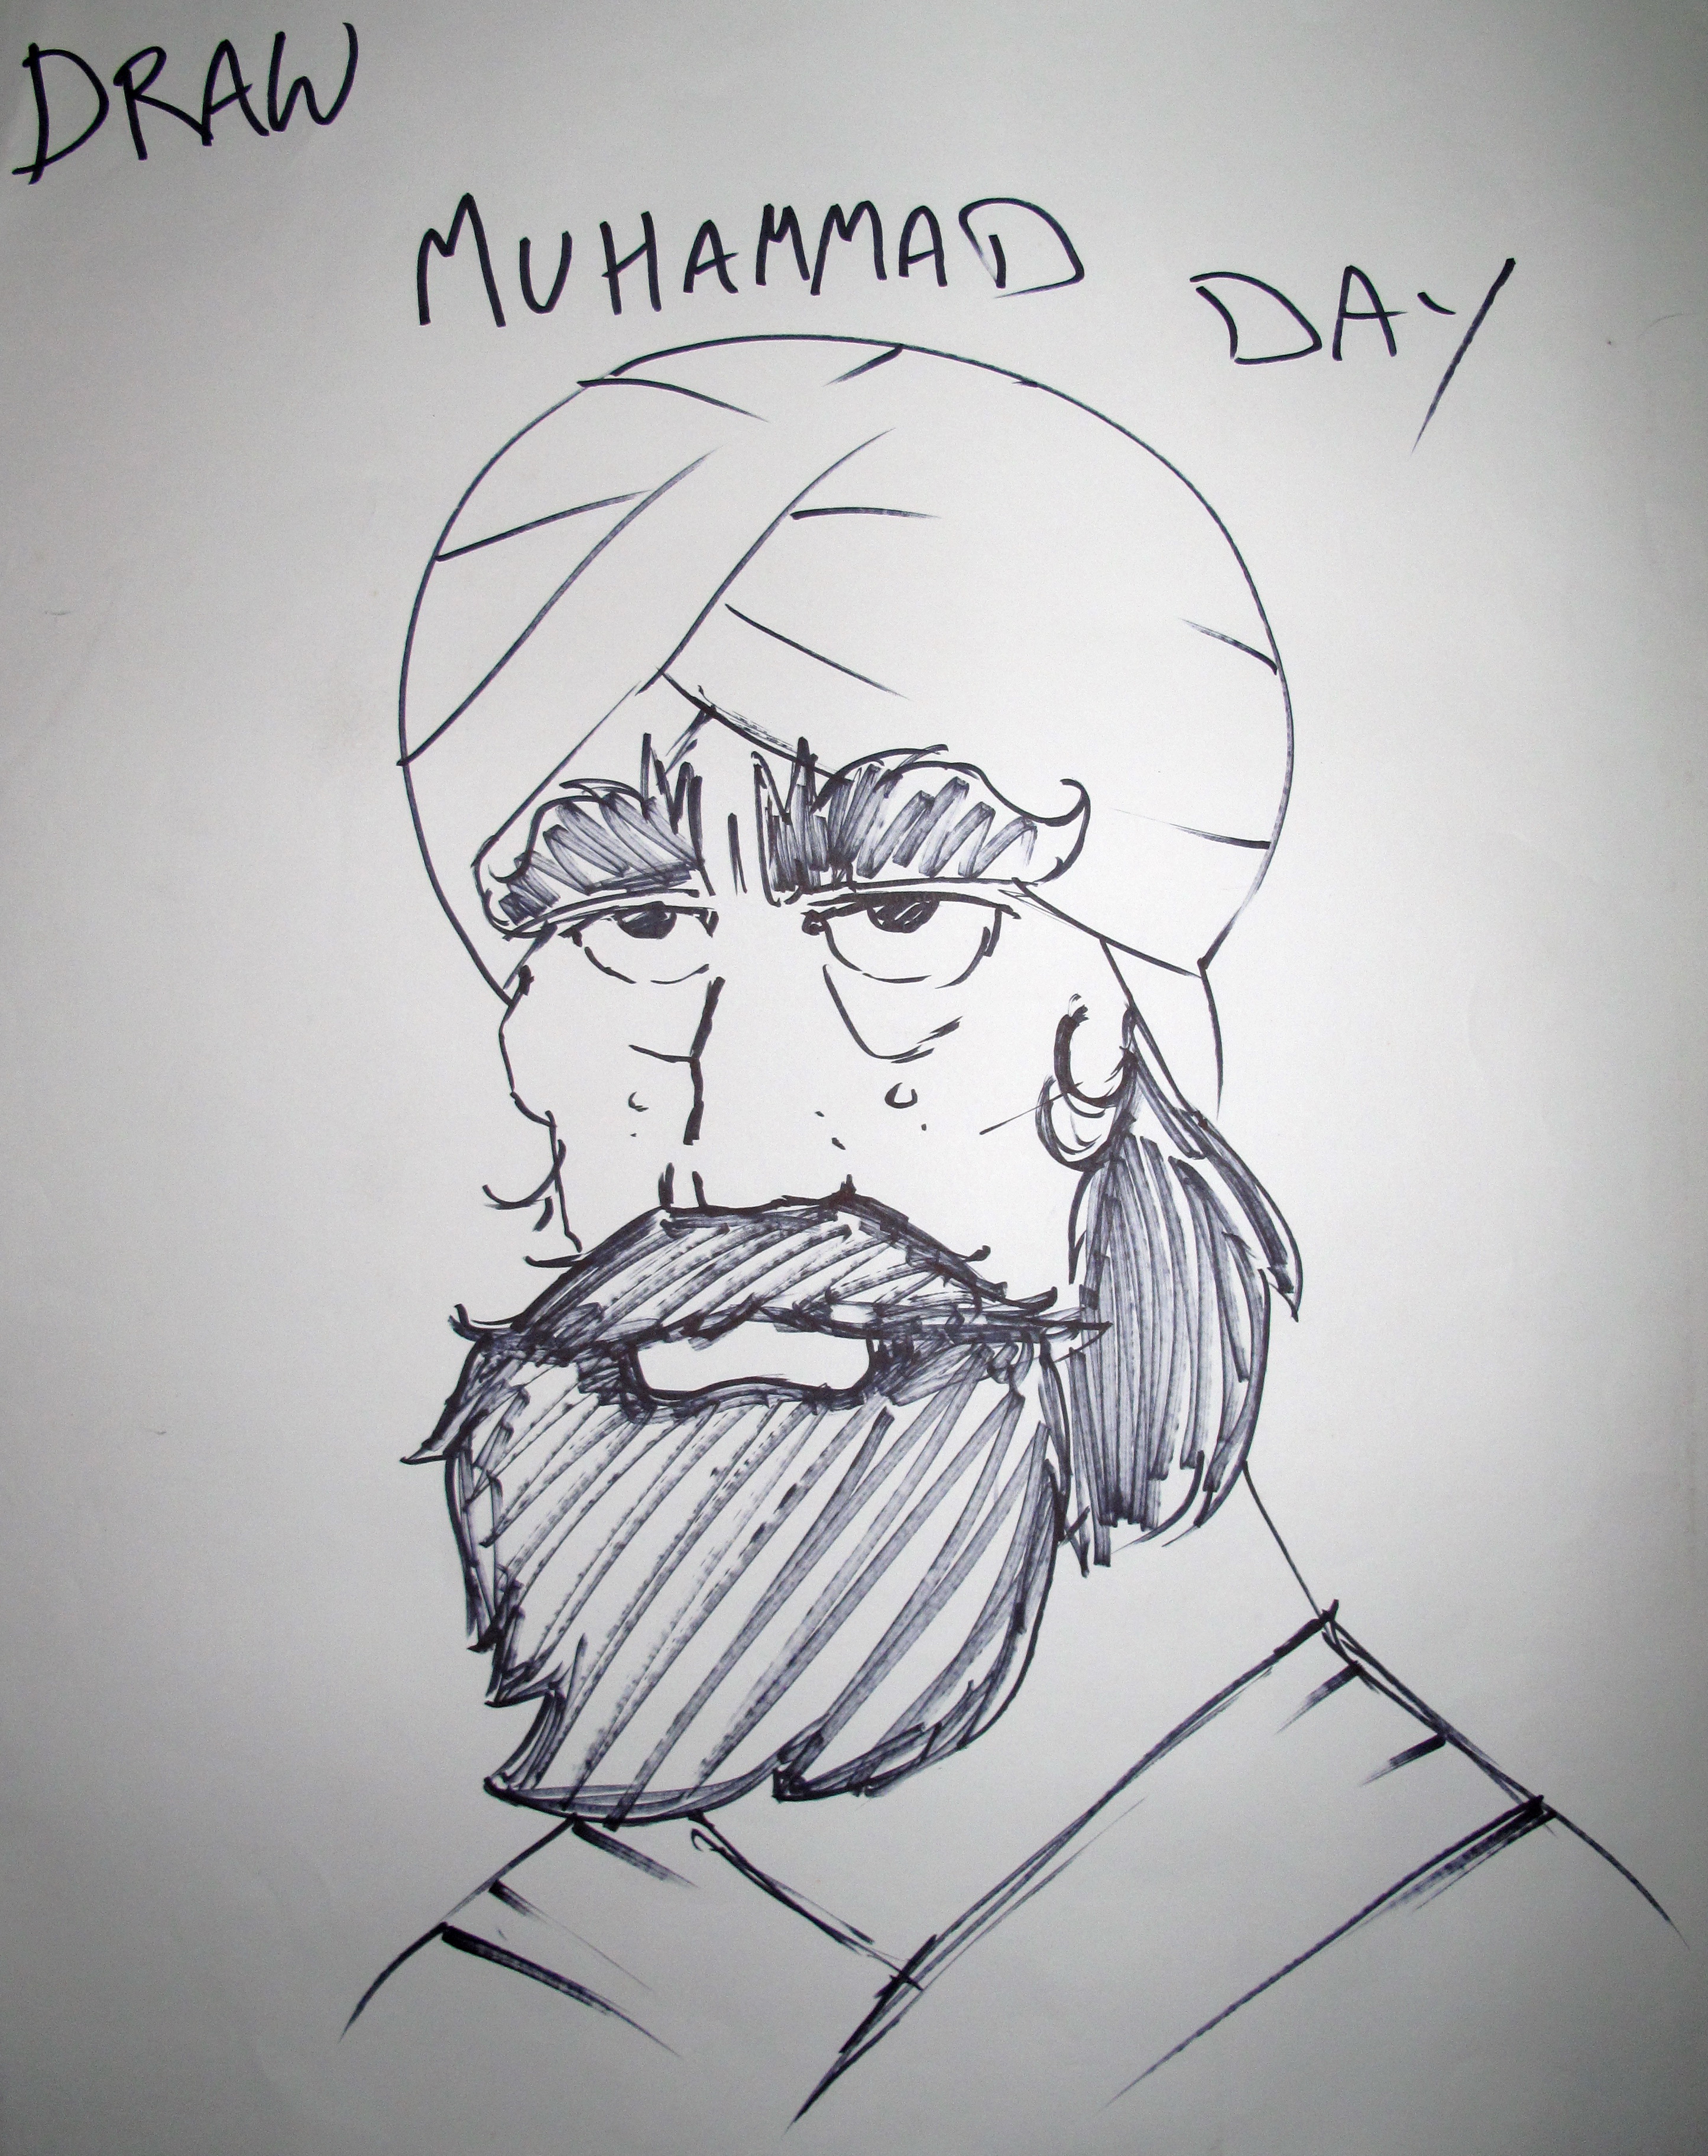 FileEverybody Draw Muhammad Day 2010 by awesomesauceuk.jpg